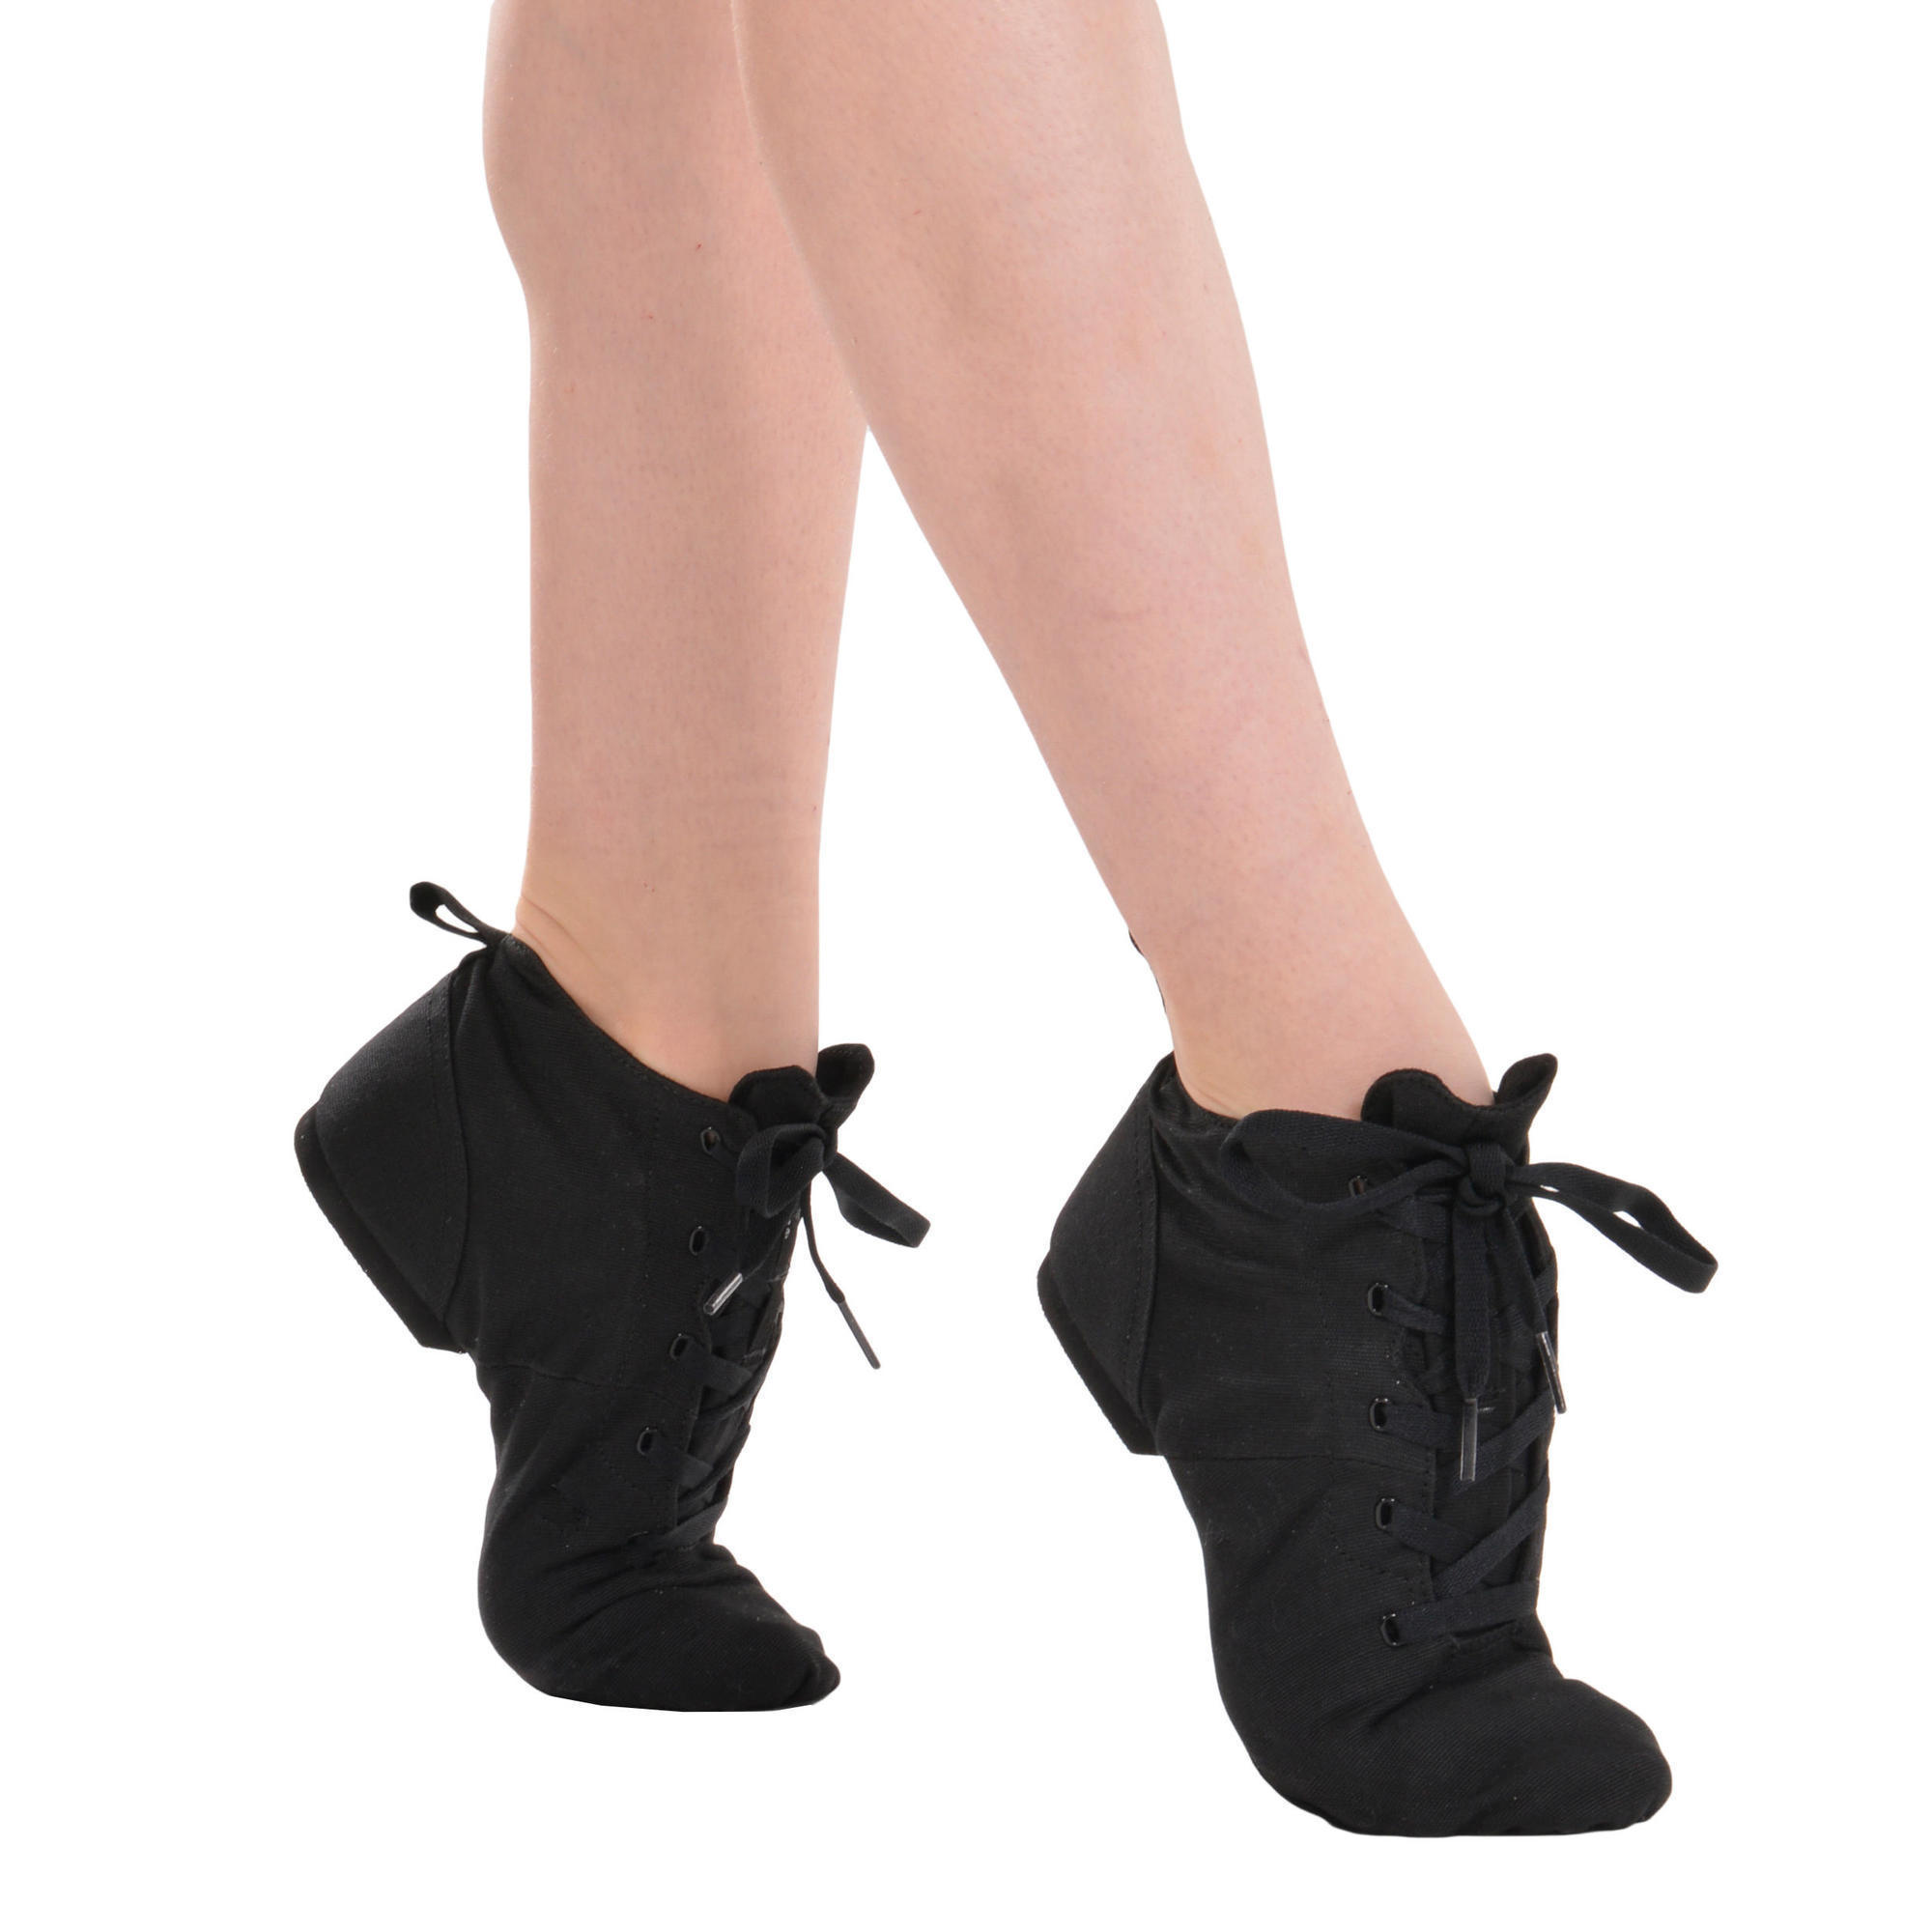 dance boots